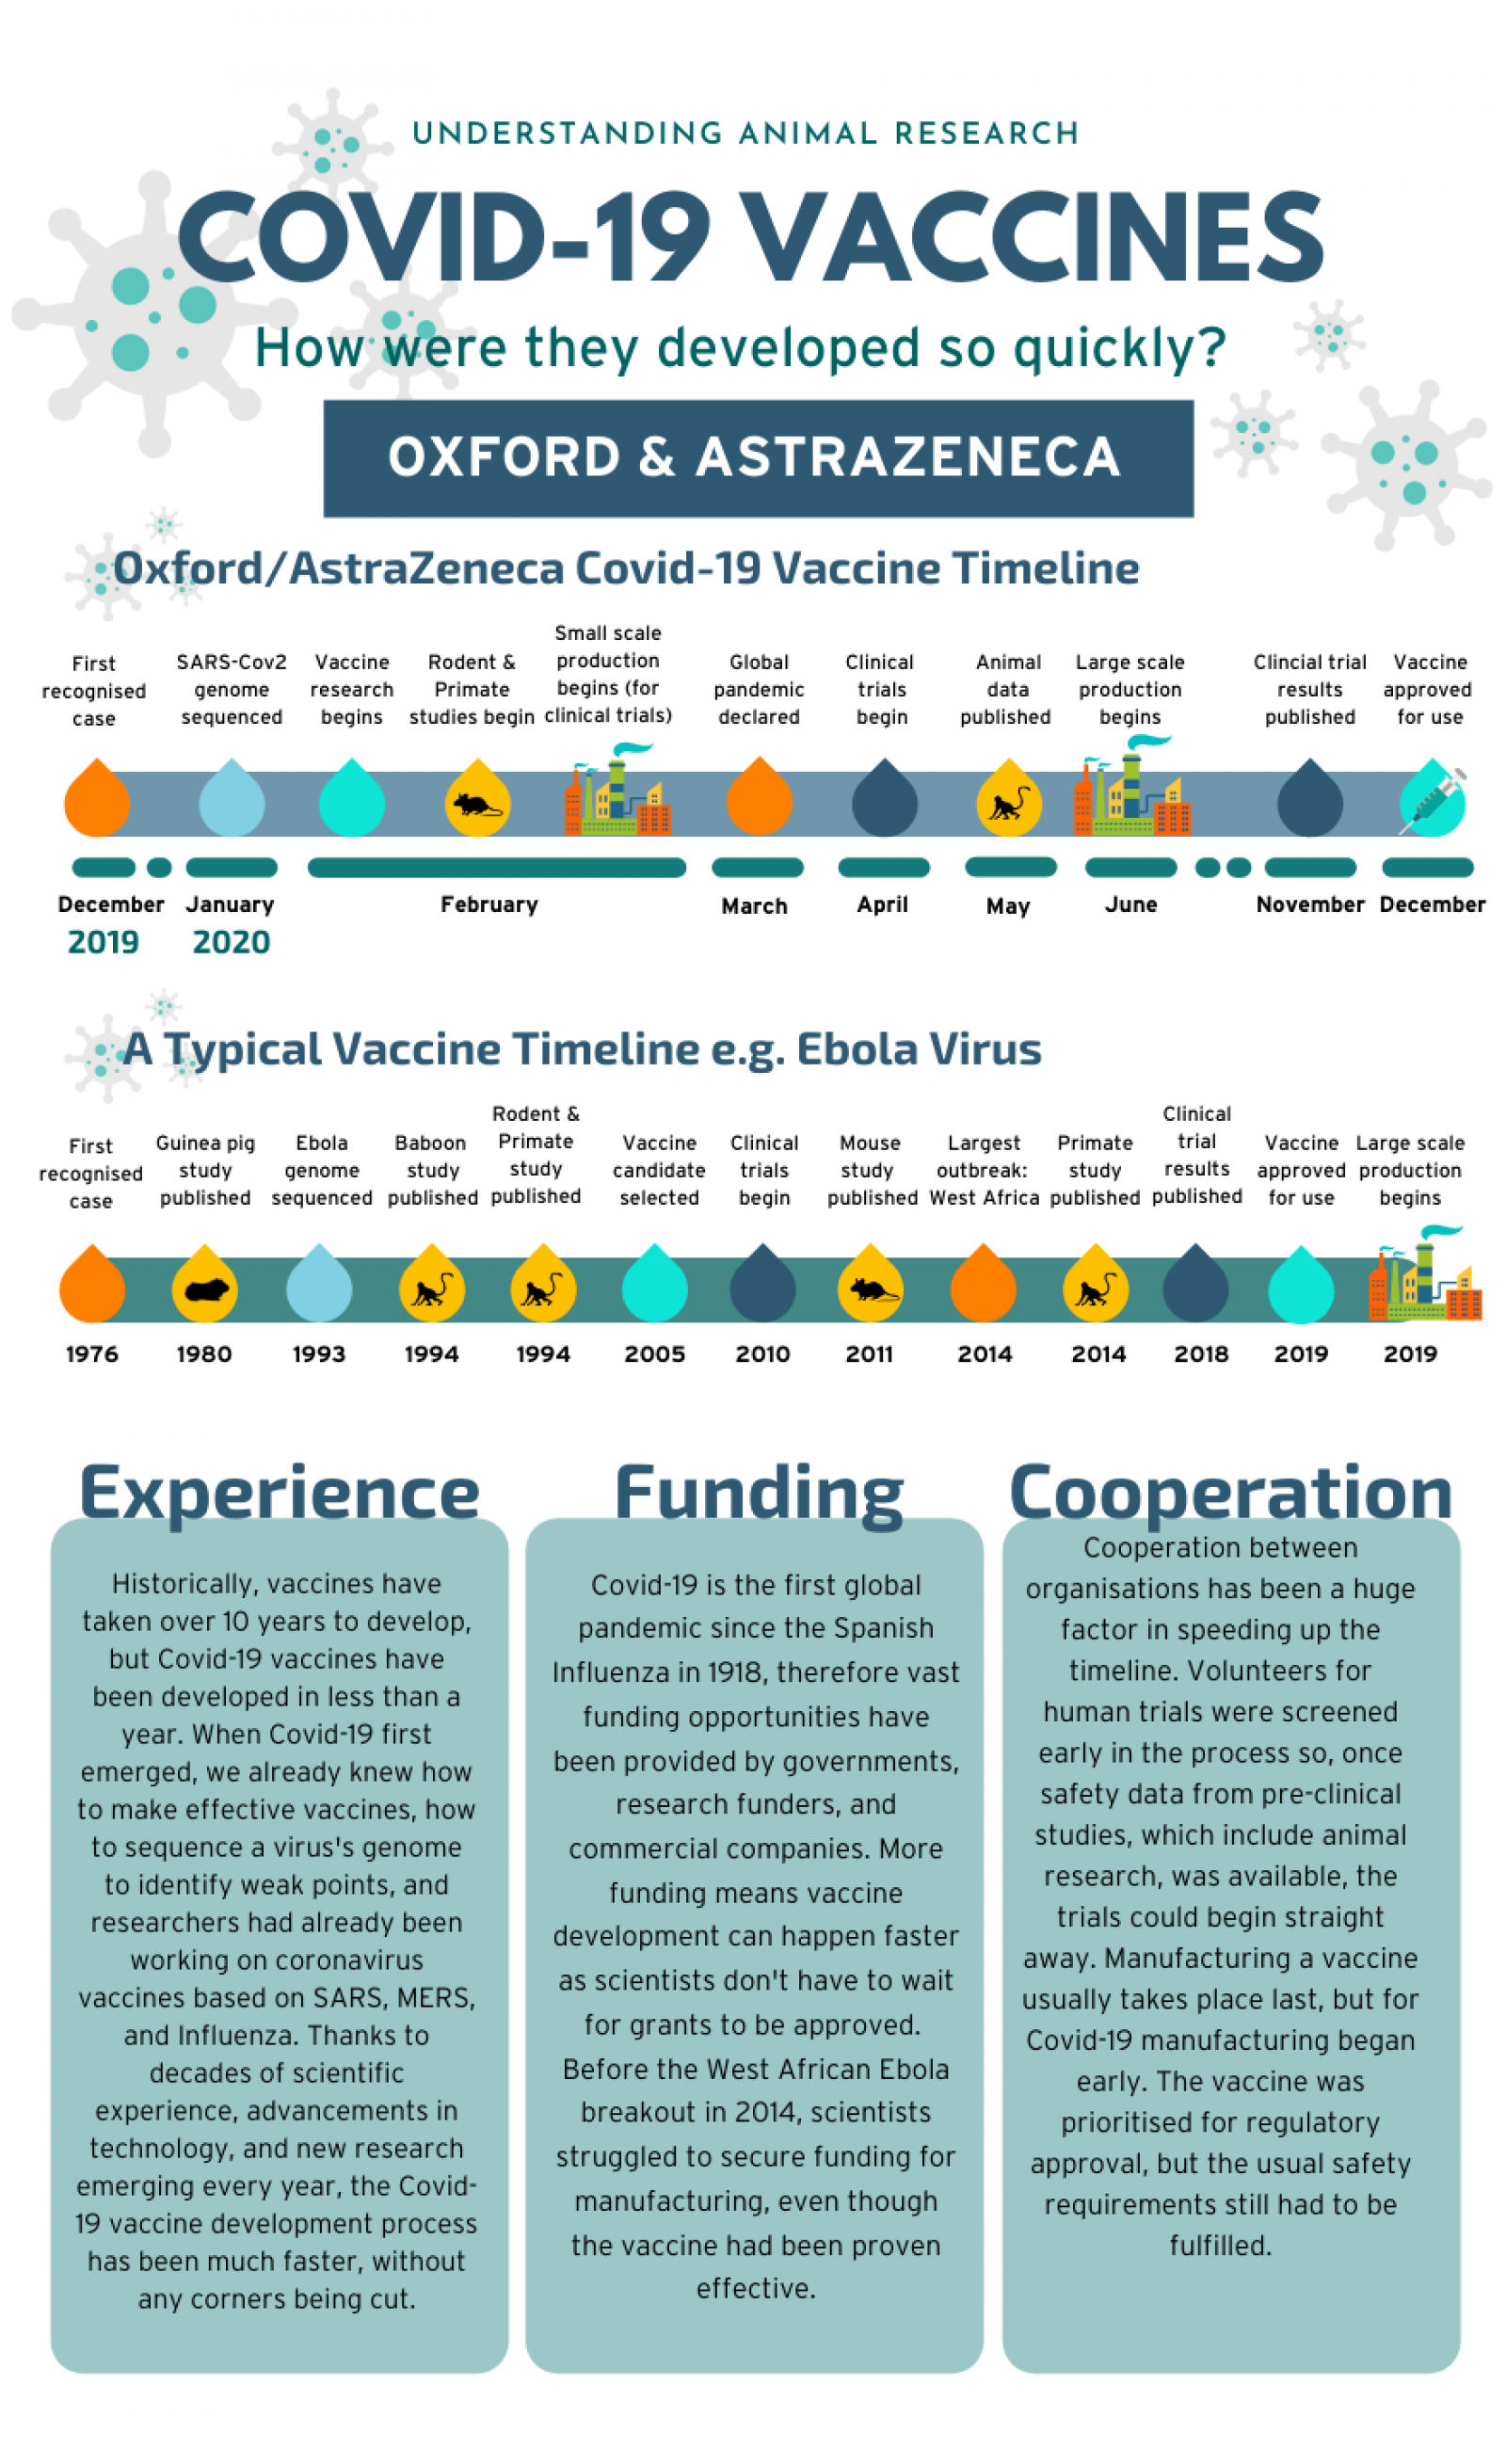 Oxford Astrazeneca vaccine timeline